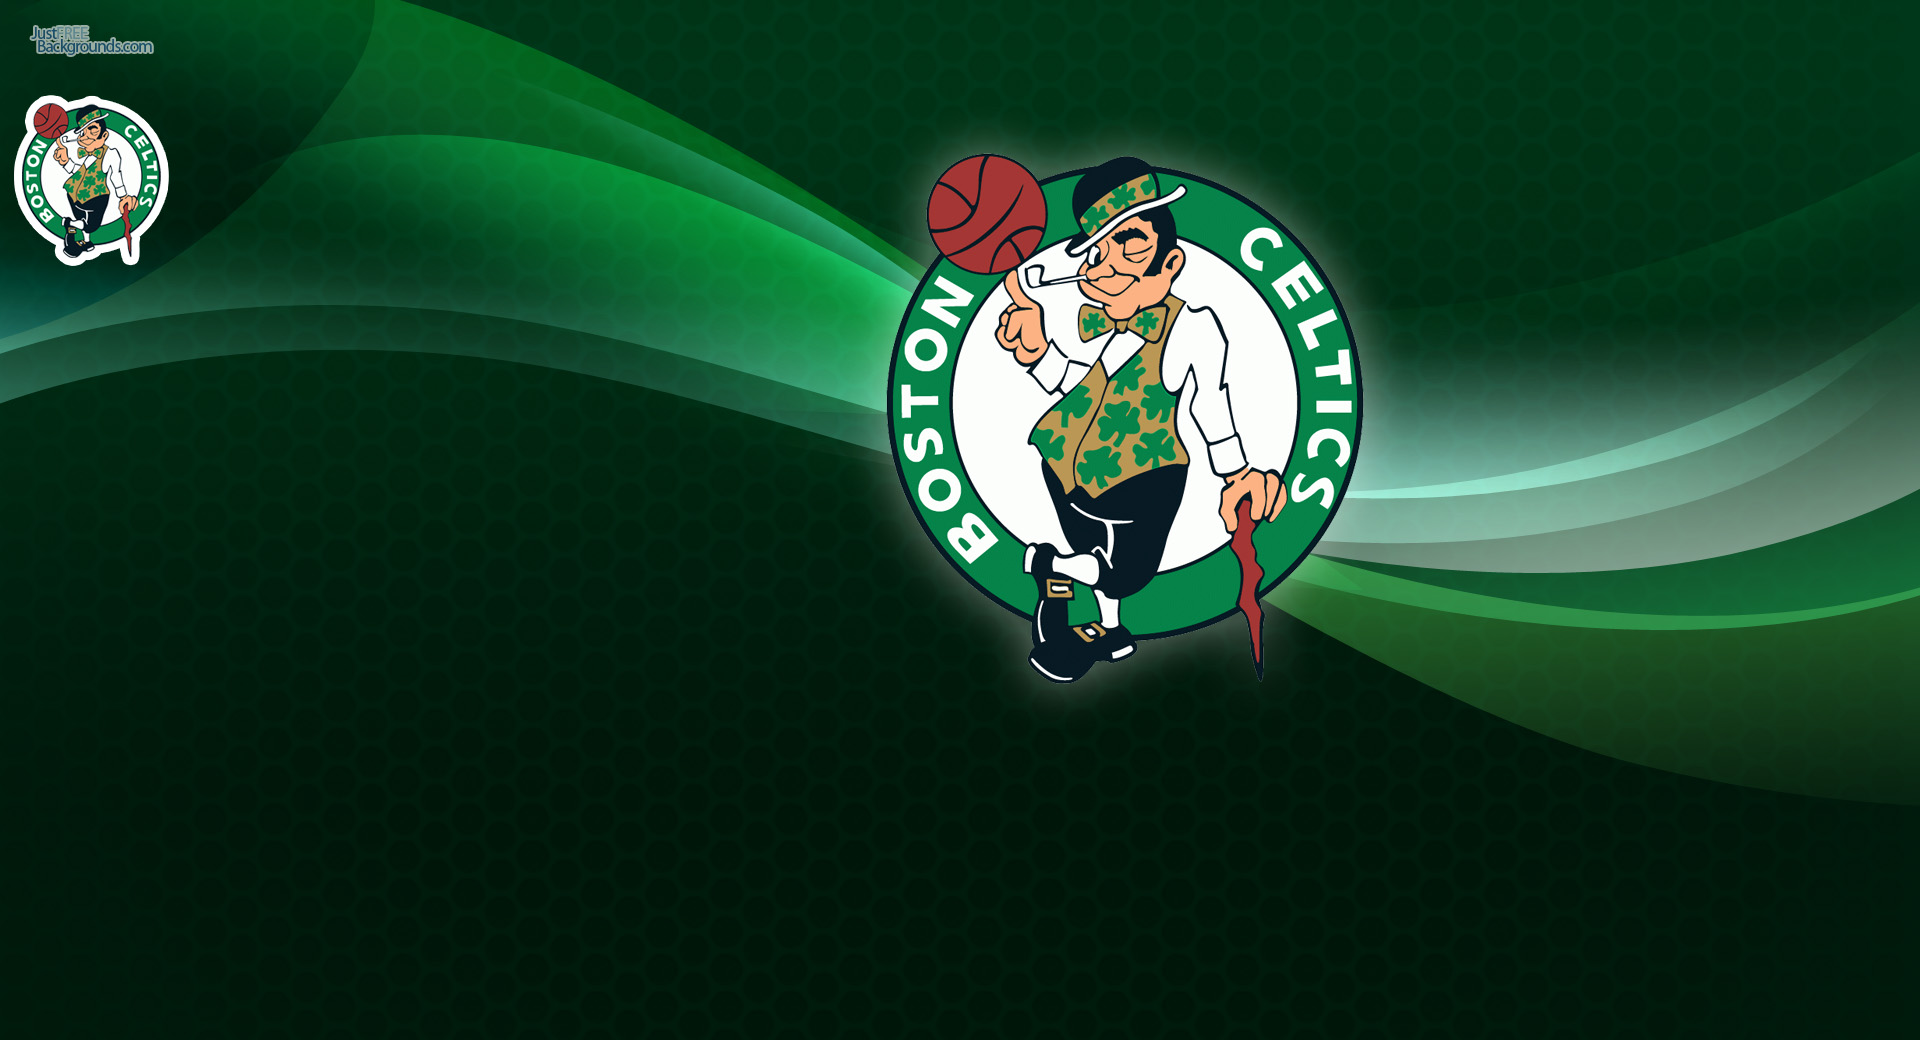 boston celtics wallpaper,green,cartoon,animated cartoon,illustration,fictional character